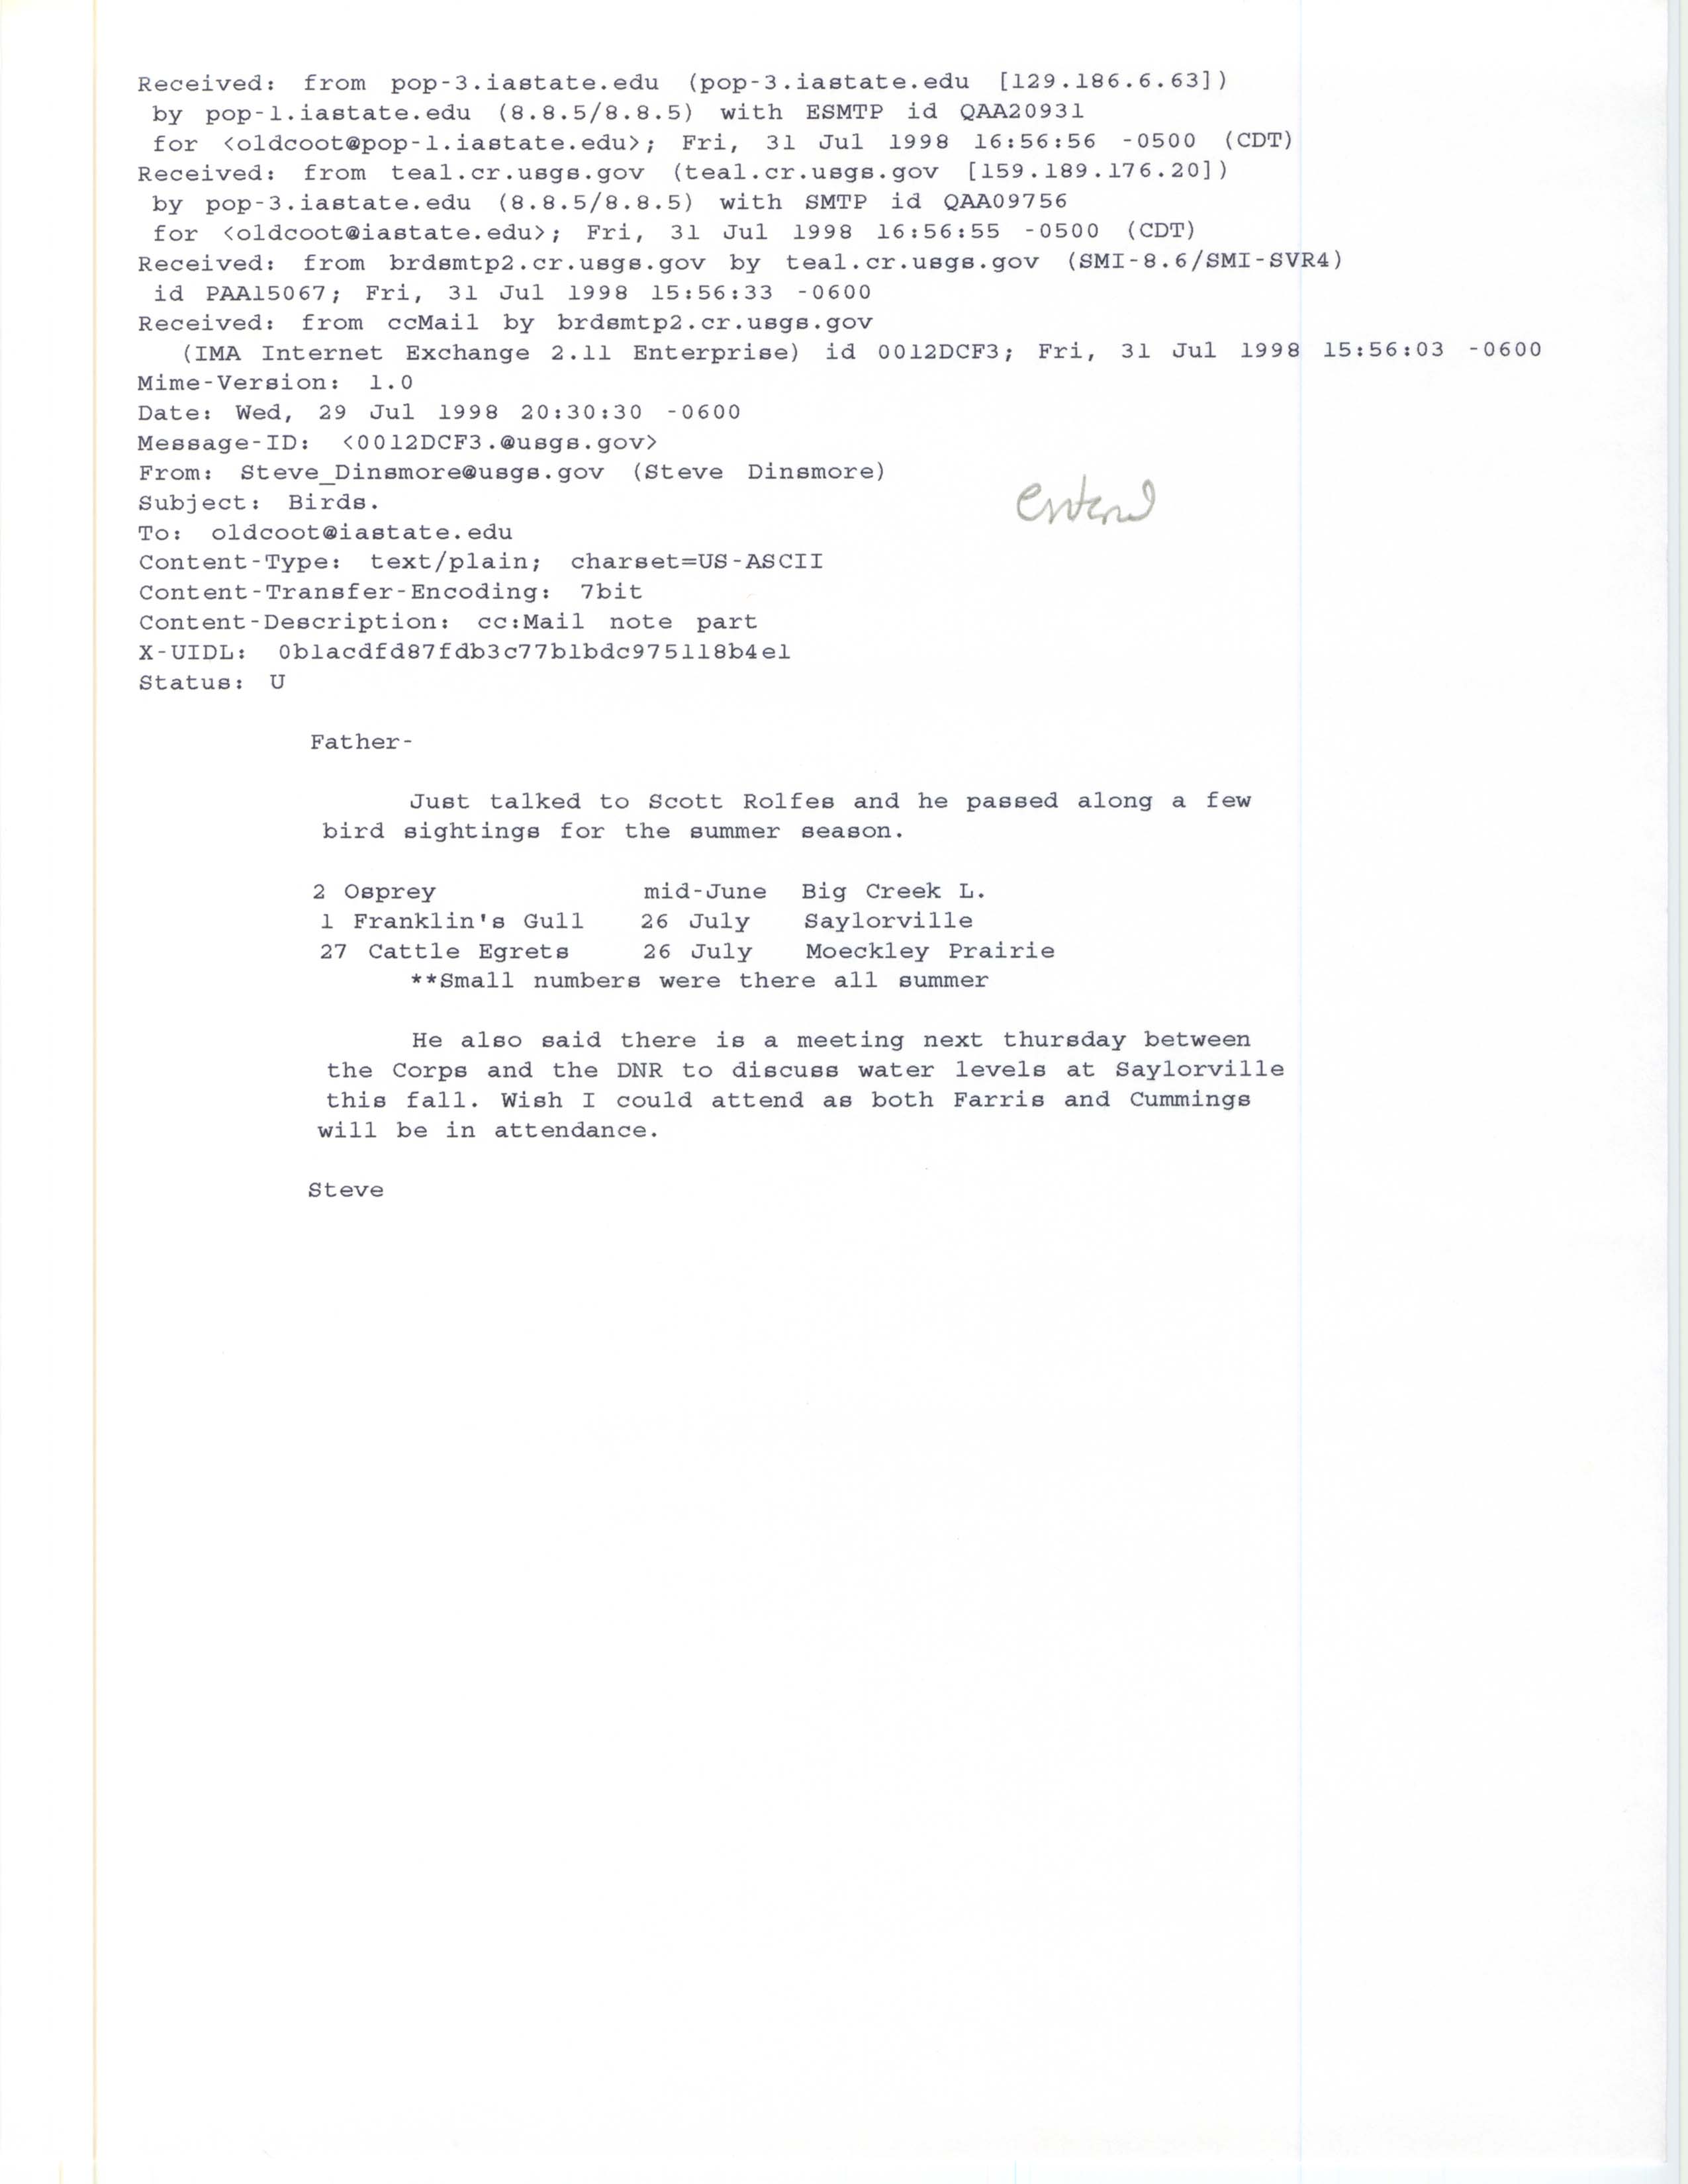 Steve Dinsmore email to Jim Dinsmore regarding Scott Rolfes sightings, July 29, 1998